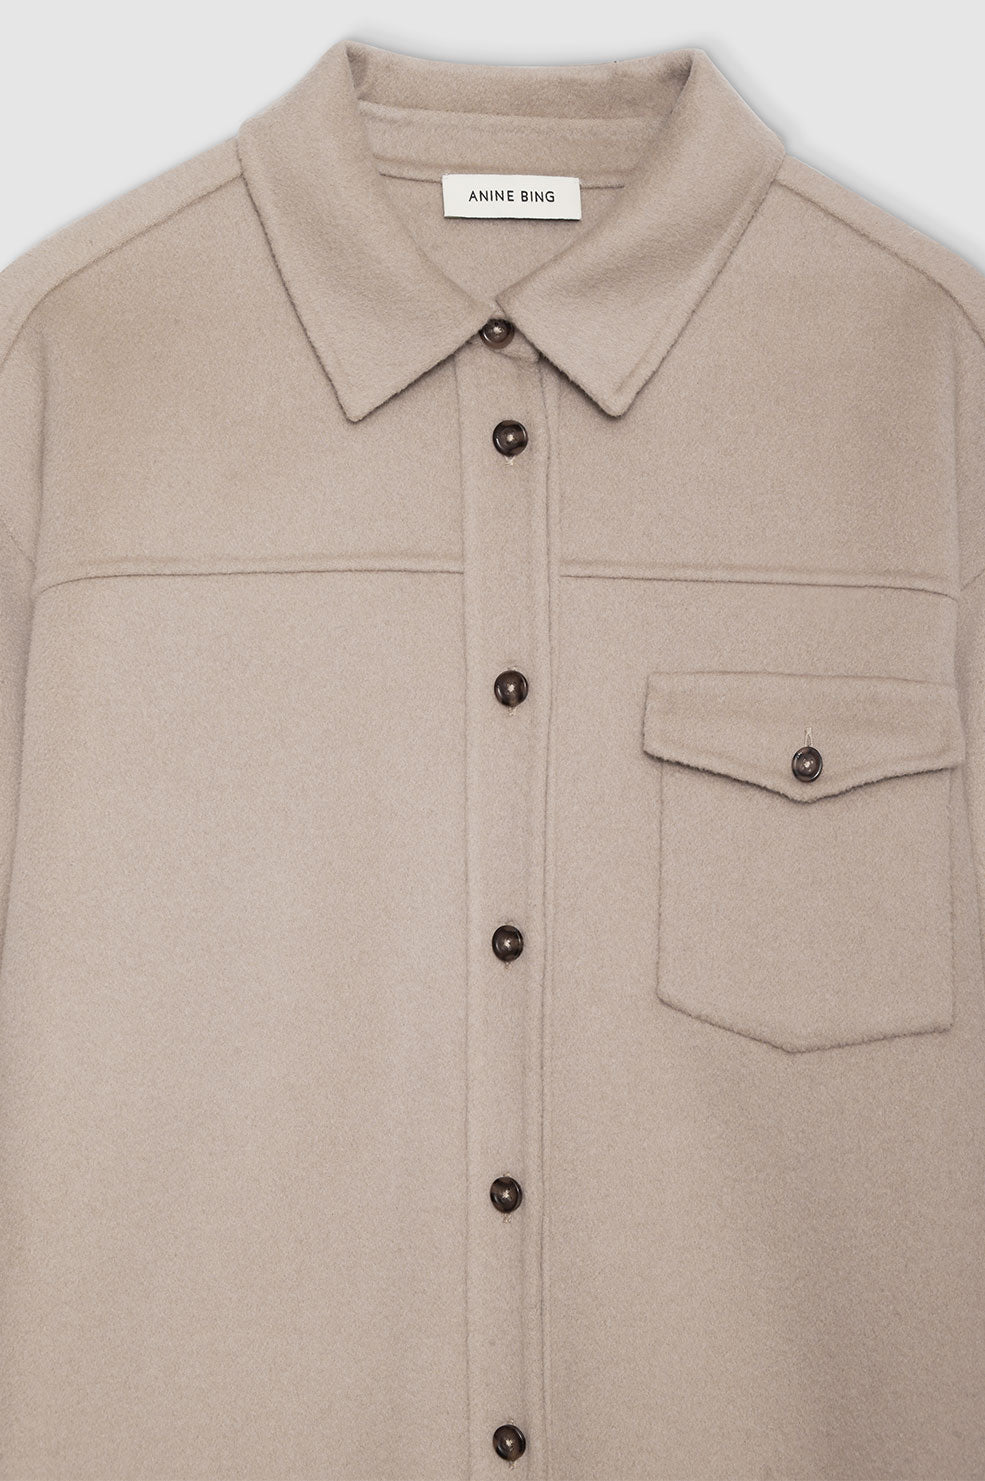 ANINE BING Sloan Shirt - Taupe Cashmere Blend